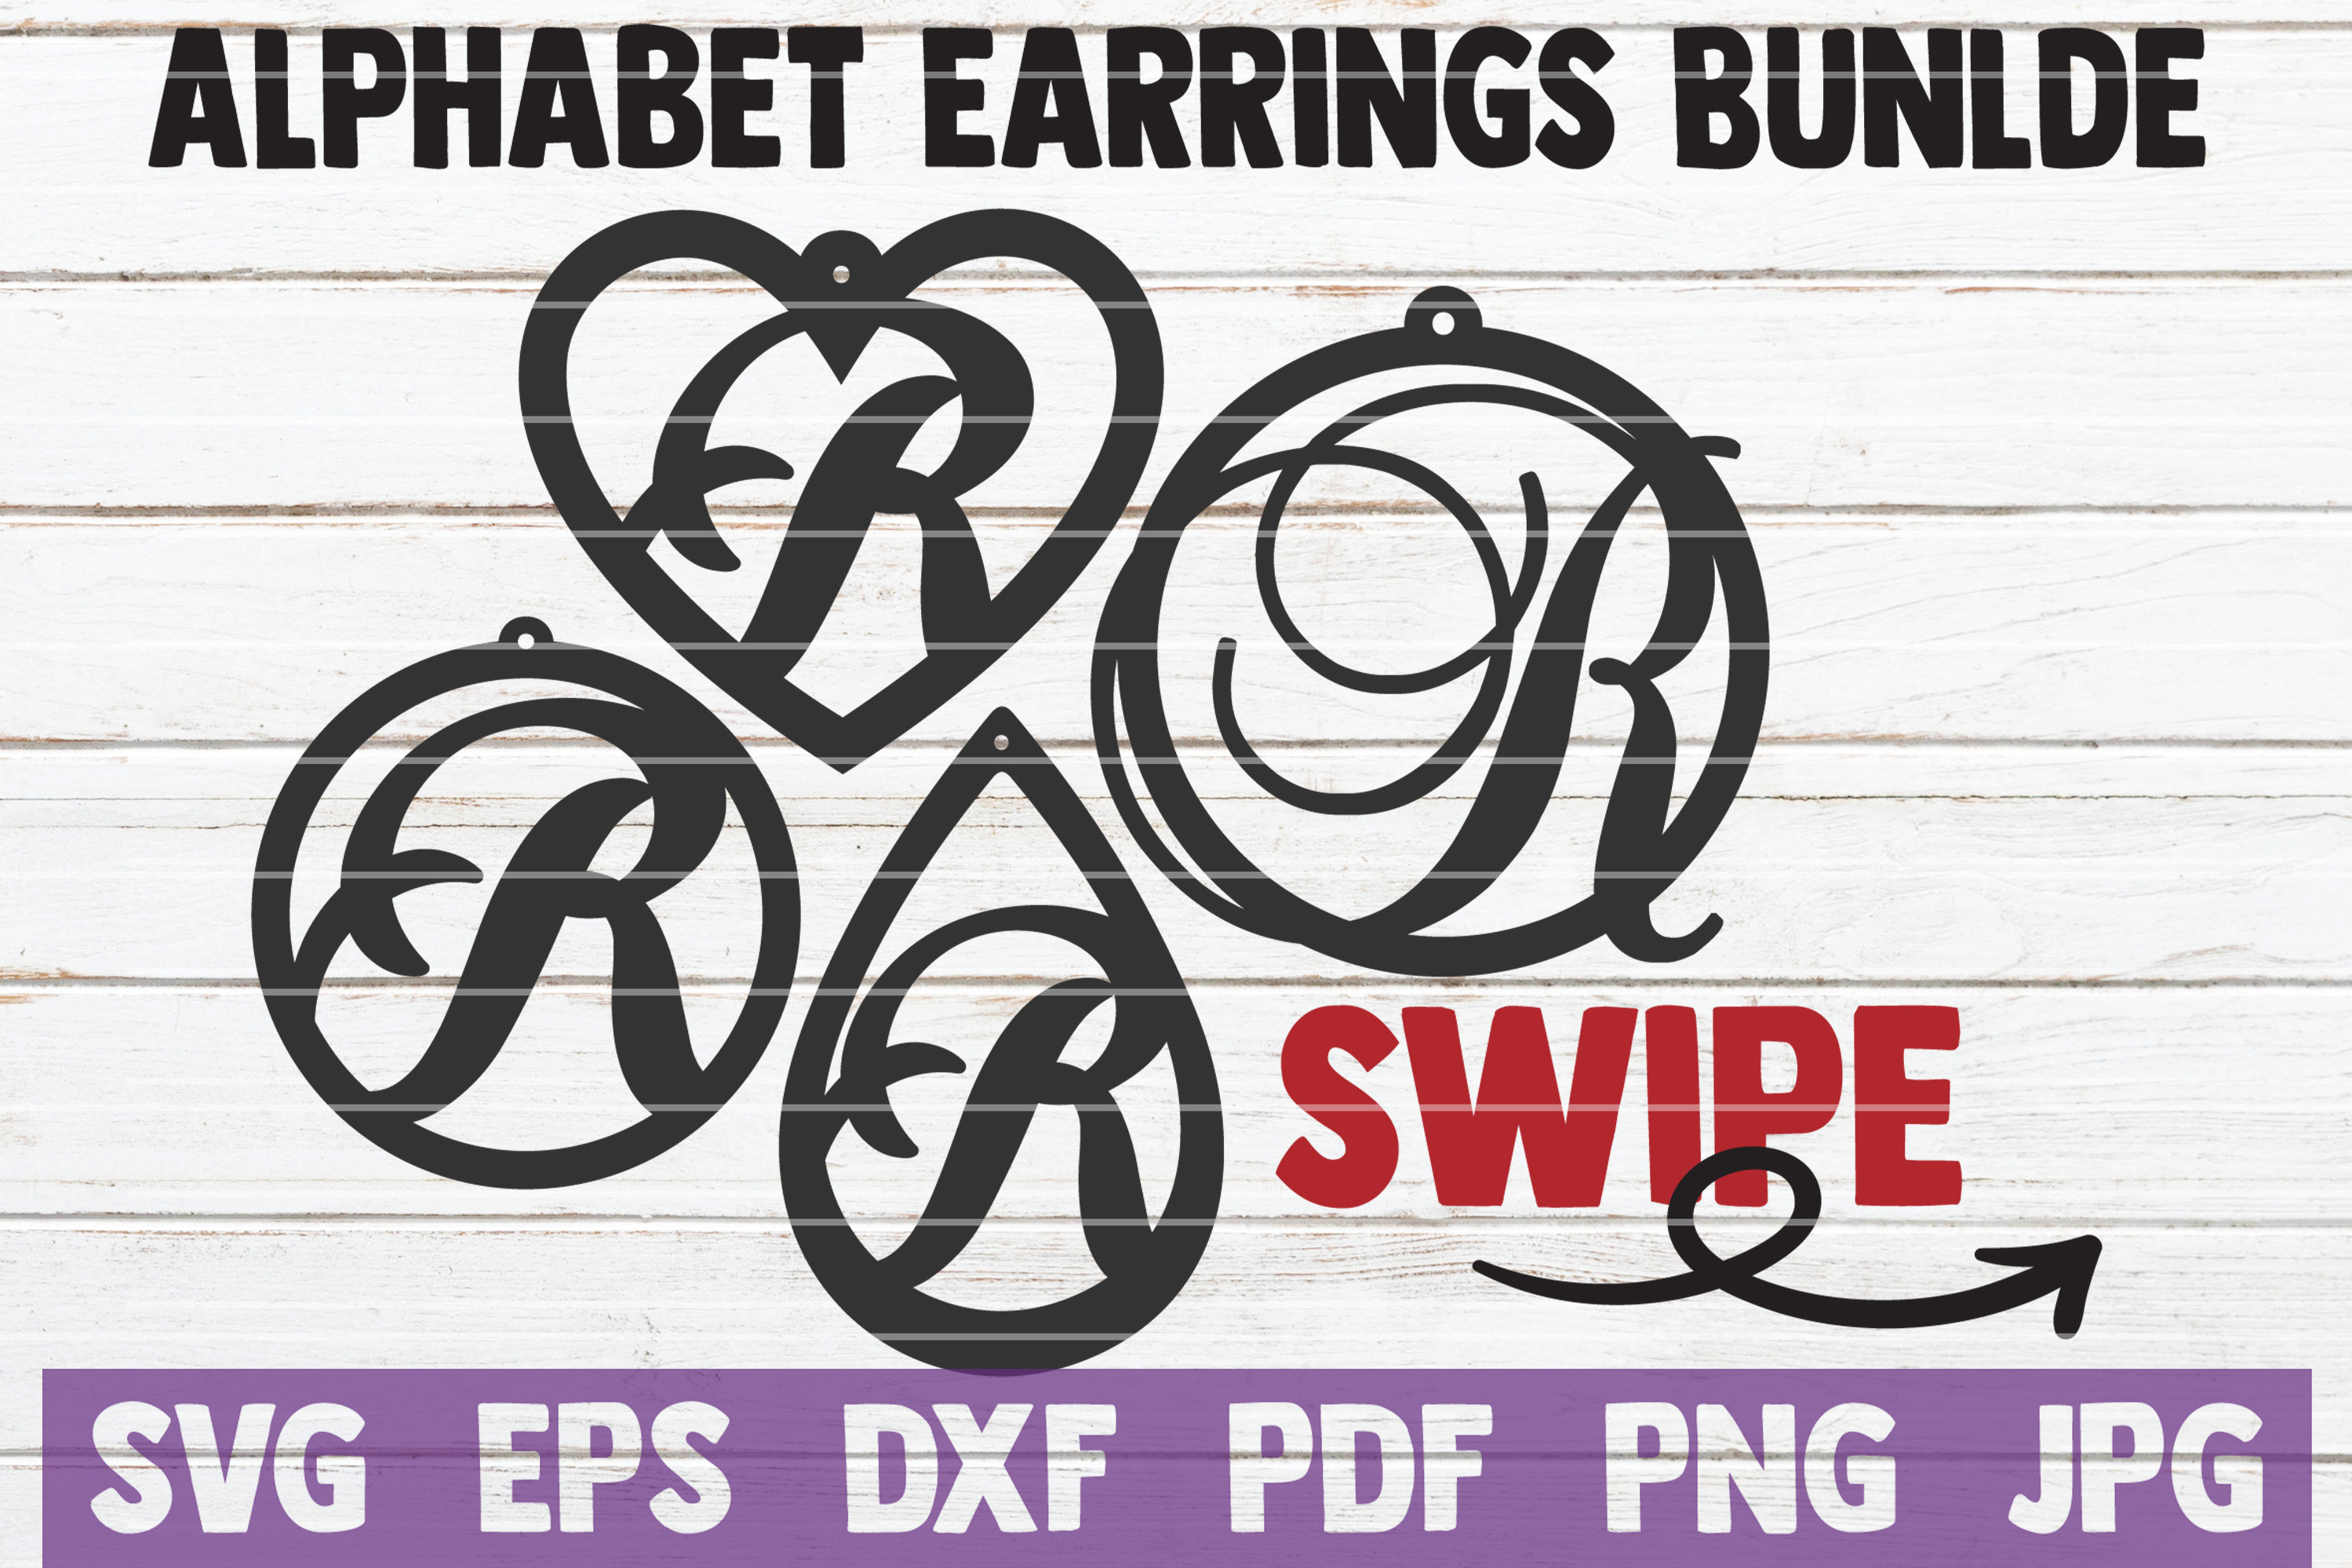 Download Alphabet Earrings Bundle | SVG Cut Files | commercial use ...